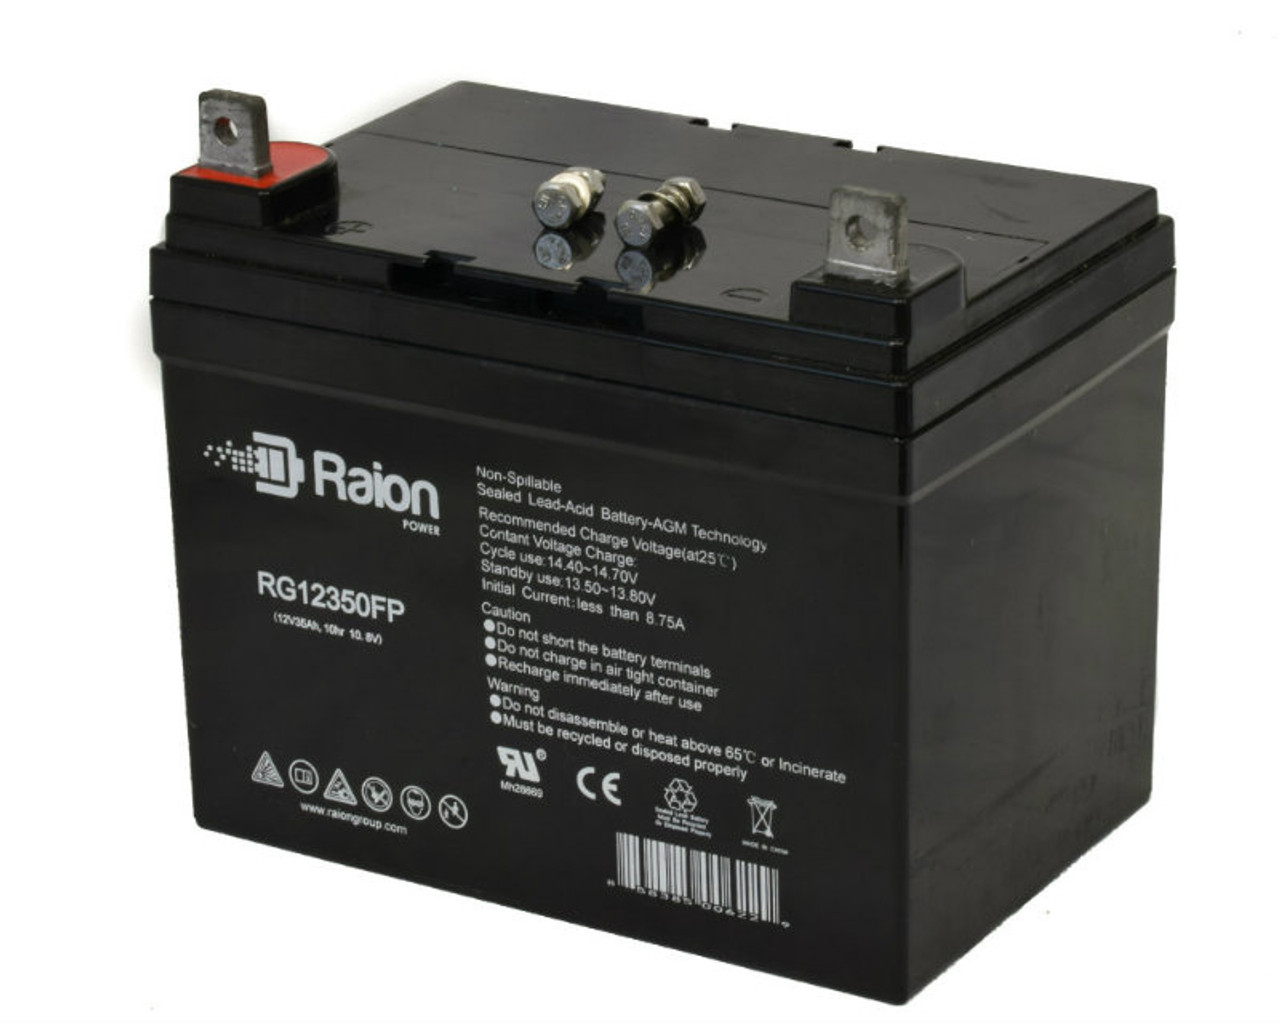 Raion Power Replacement 12V 35Ah RG12350FP Battery for Black & Decker CMM630 Type 1